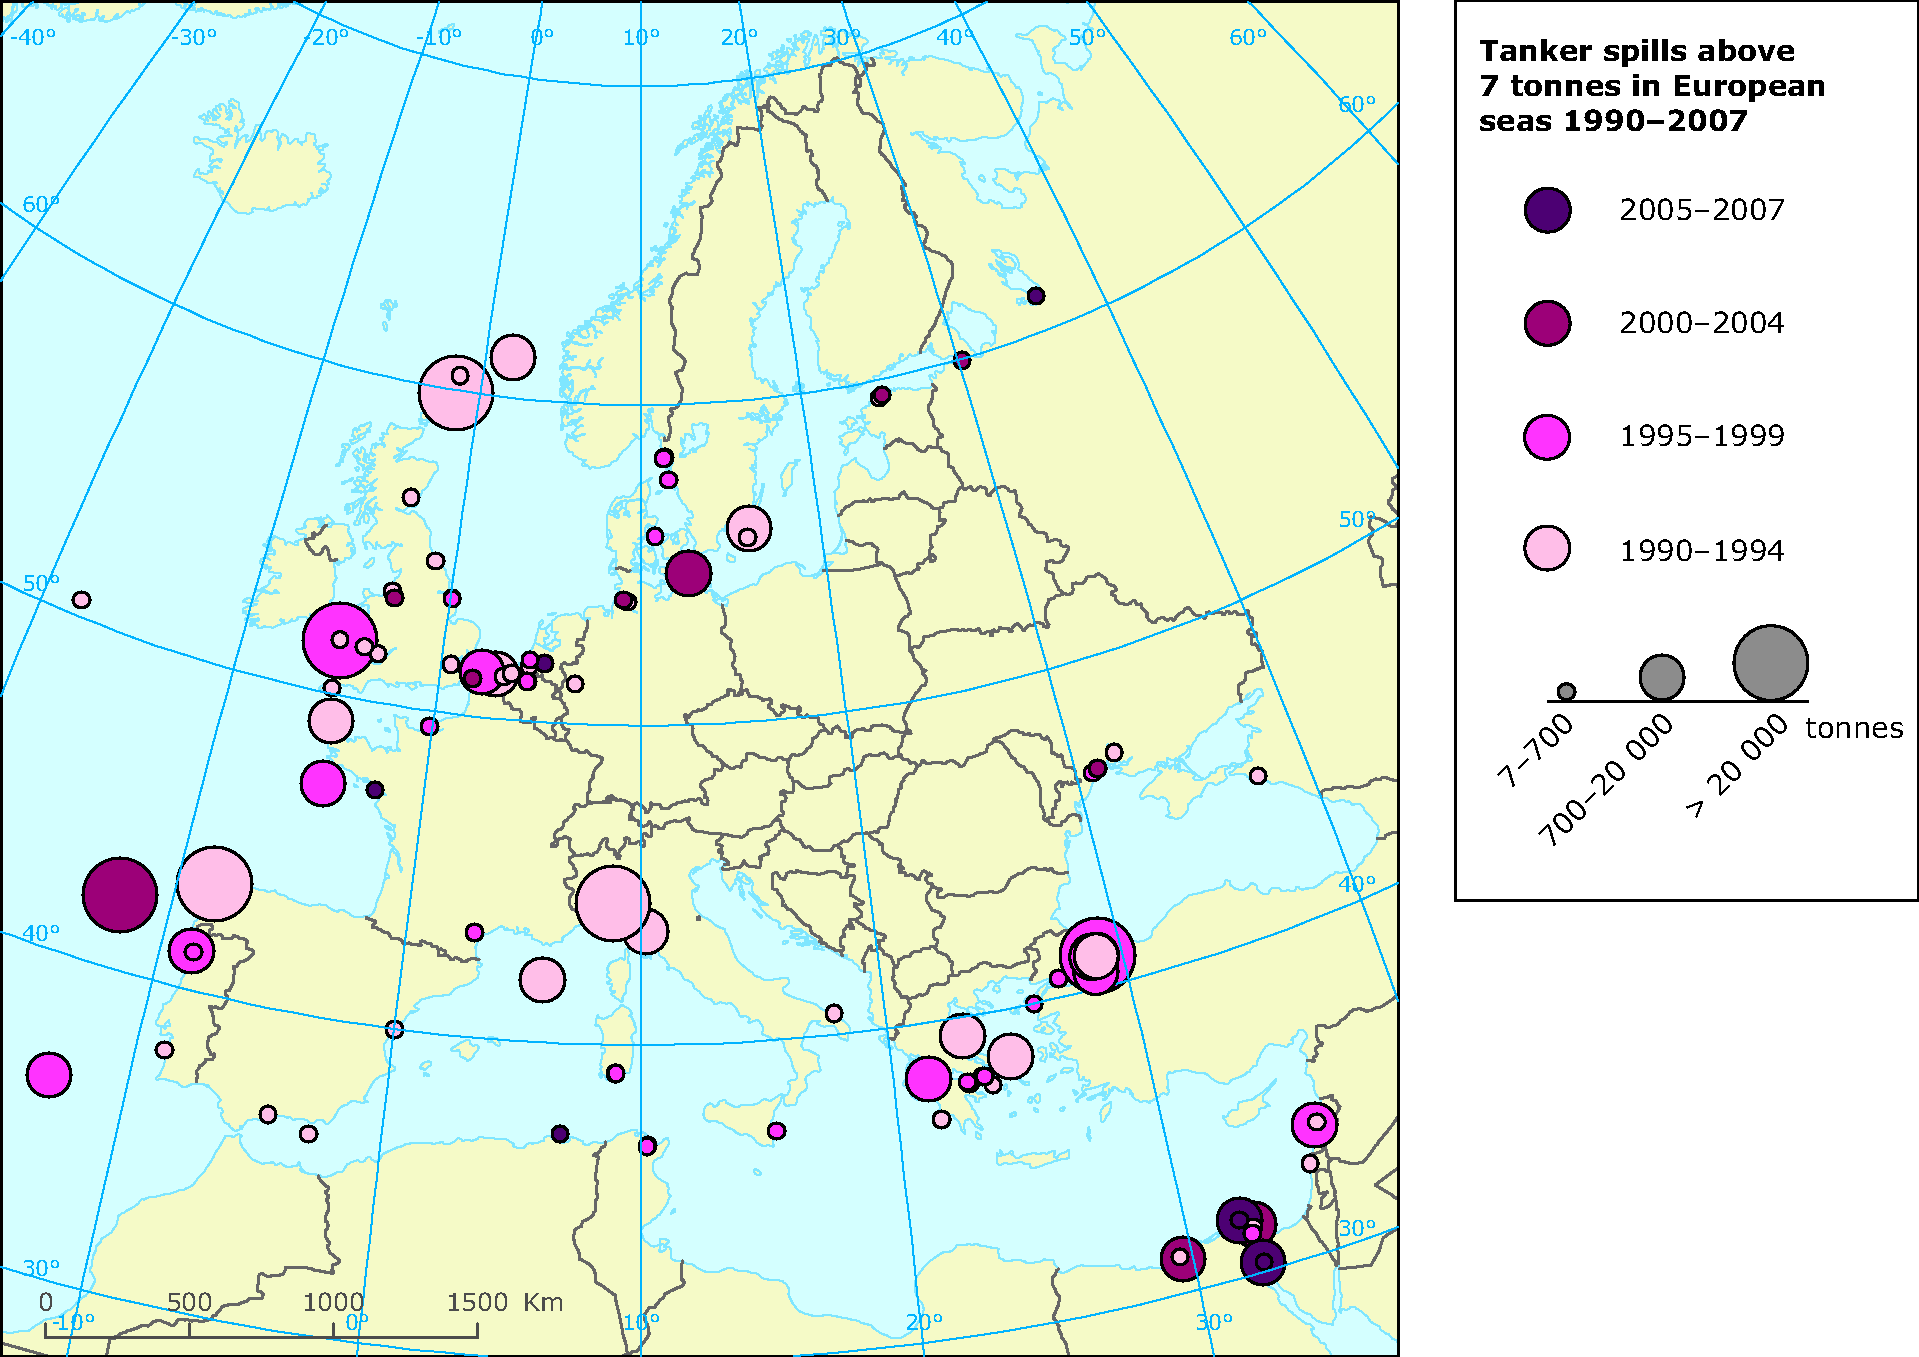 Large (> 7 tonnes) tanker spills in European waters 1990-2007